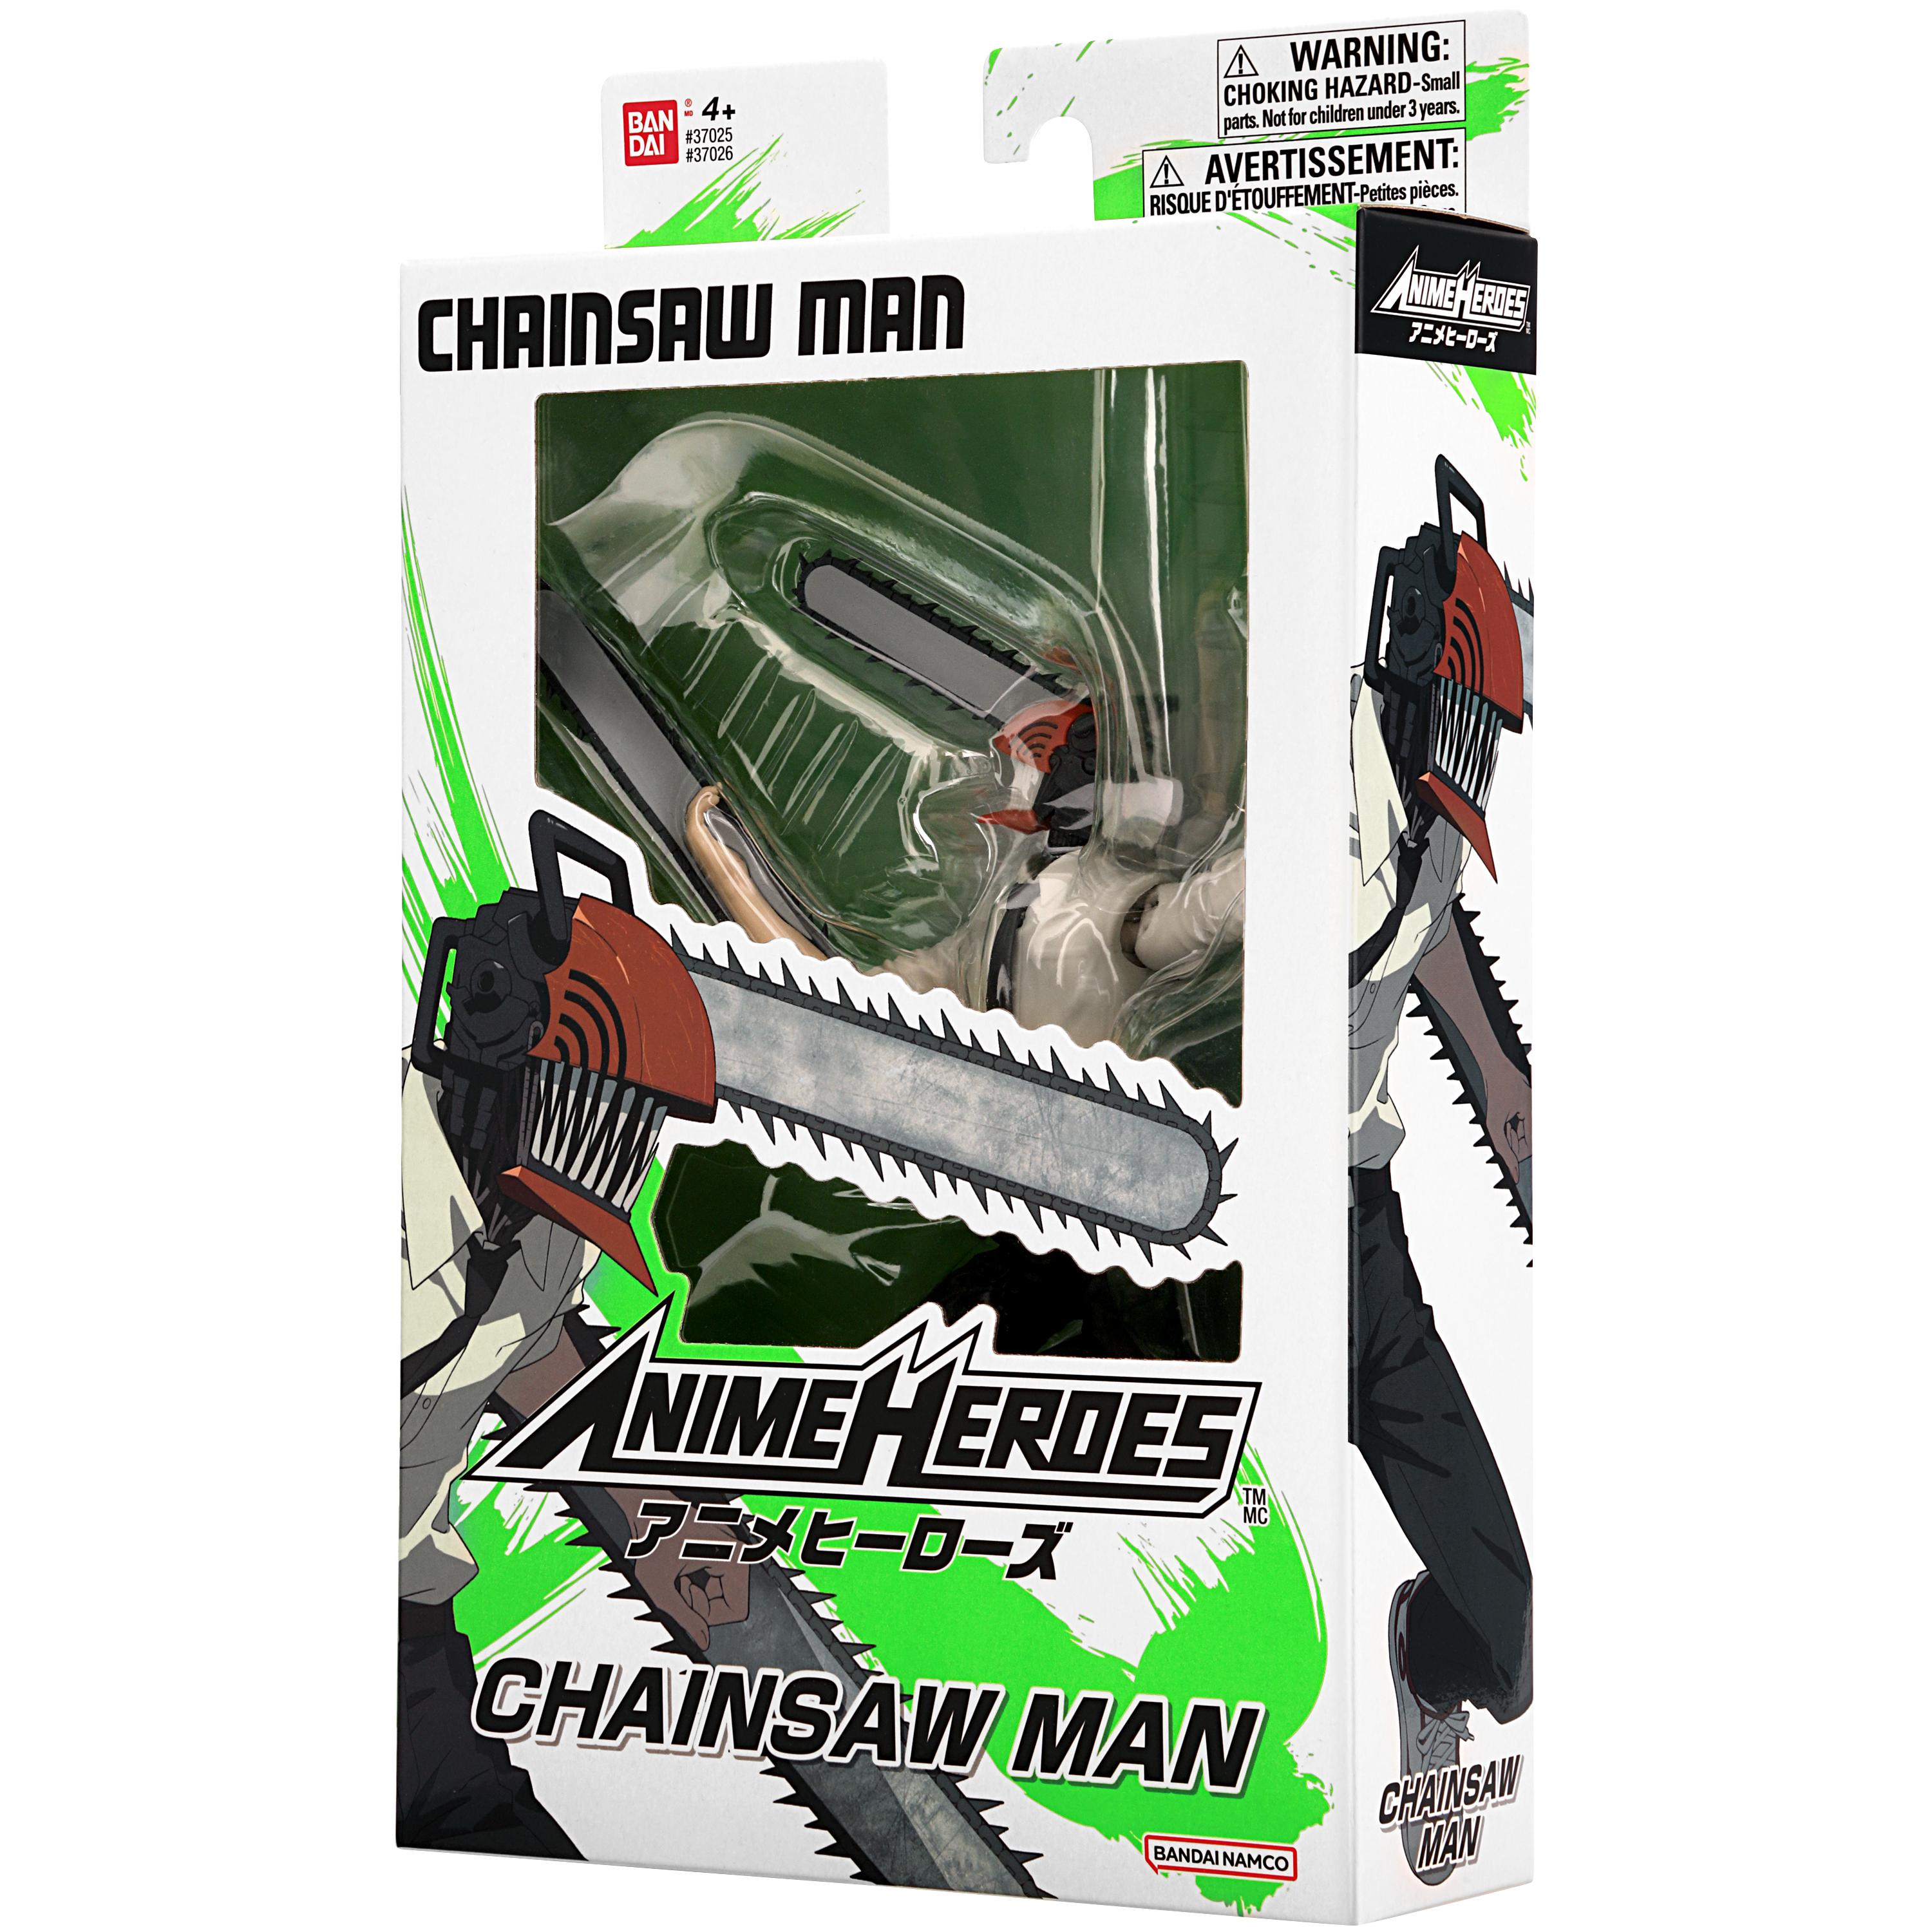 Chainsaw Man: onde o anime parou no mangá?-demhanvico.com.vn